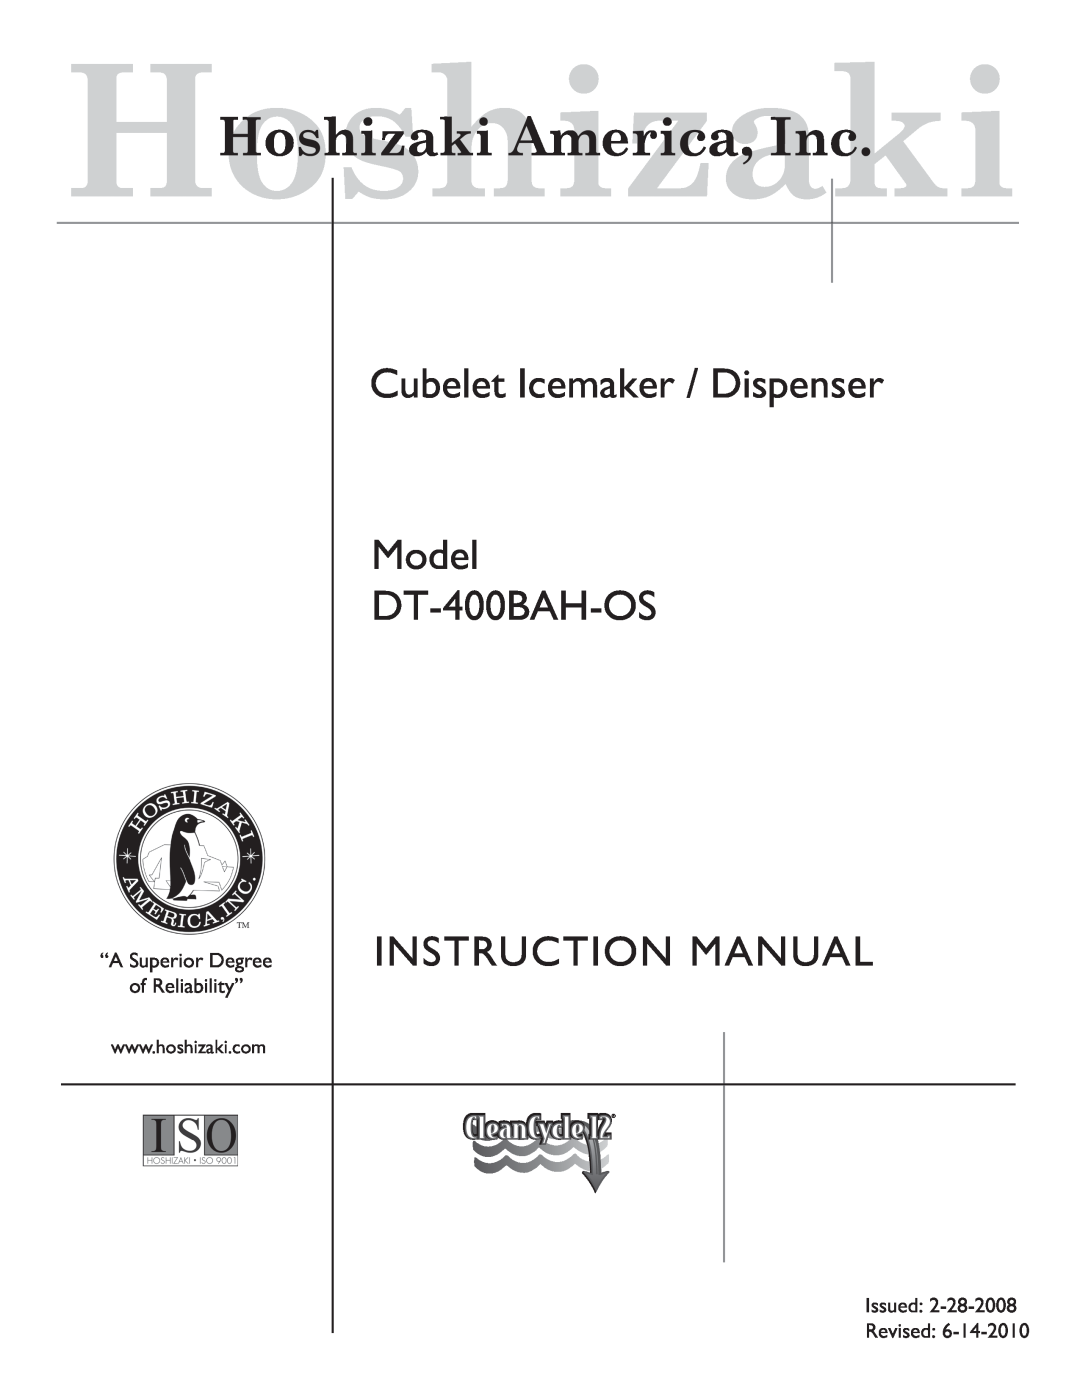 Hoshizaki instruction manual Cubelet Icemaker / Dispenser Model DT-400BAH-OS, HoshizakiHoshizaki America, Inc 